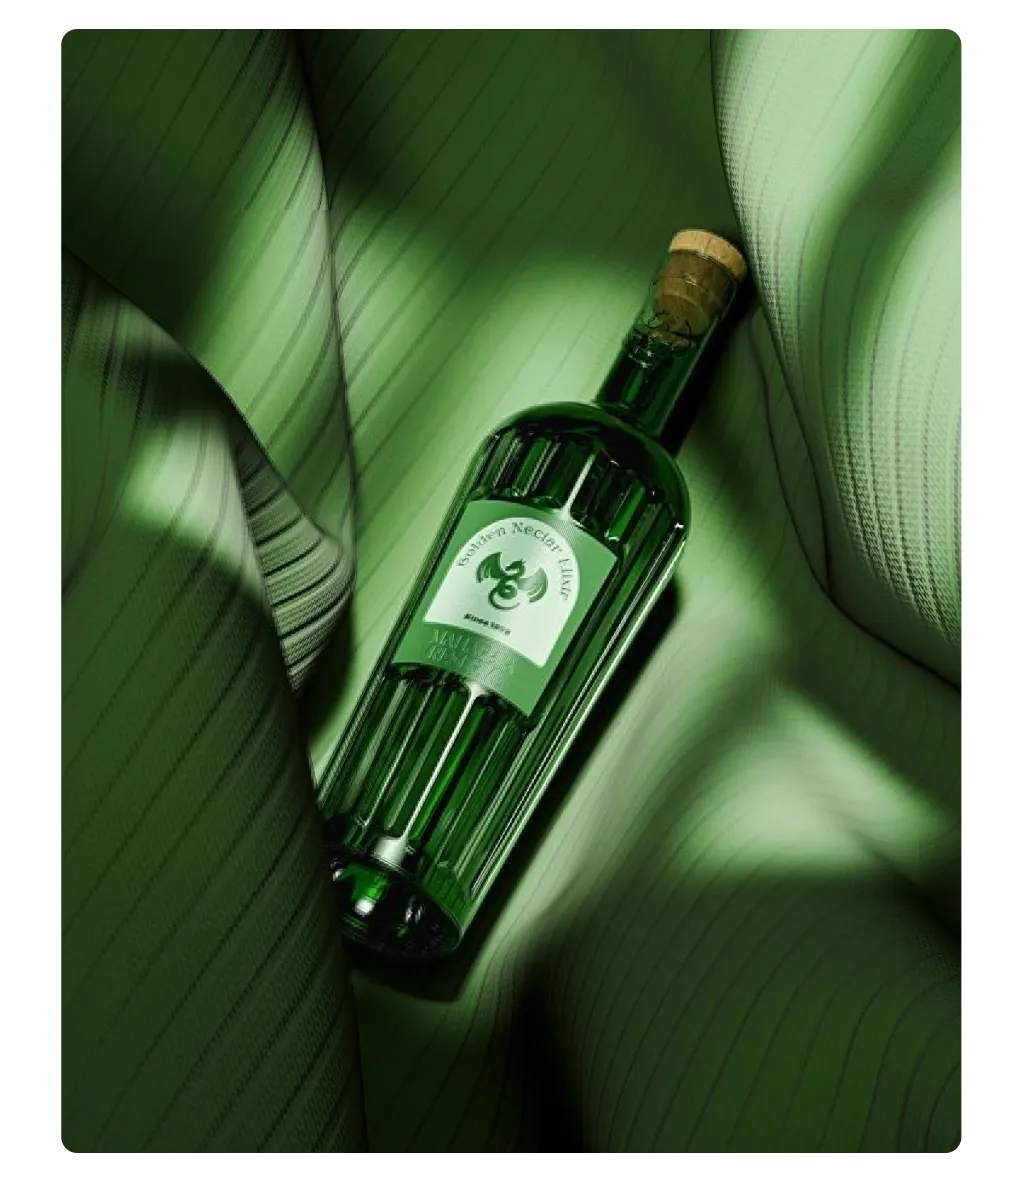 A green bottle